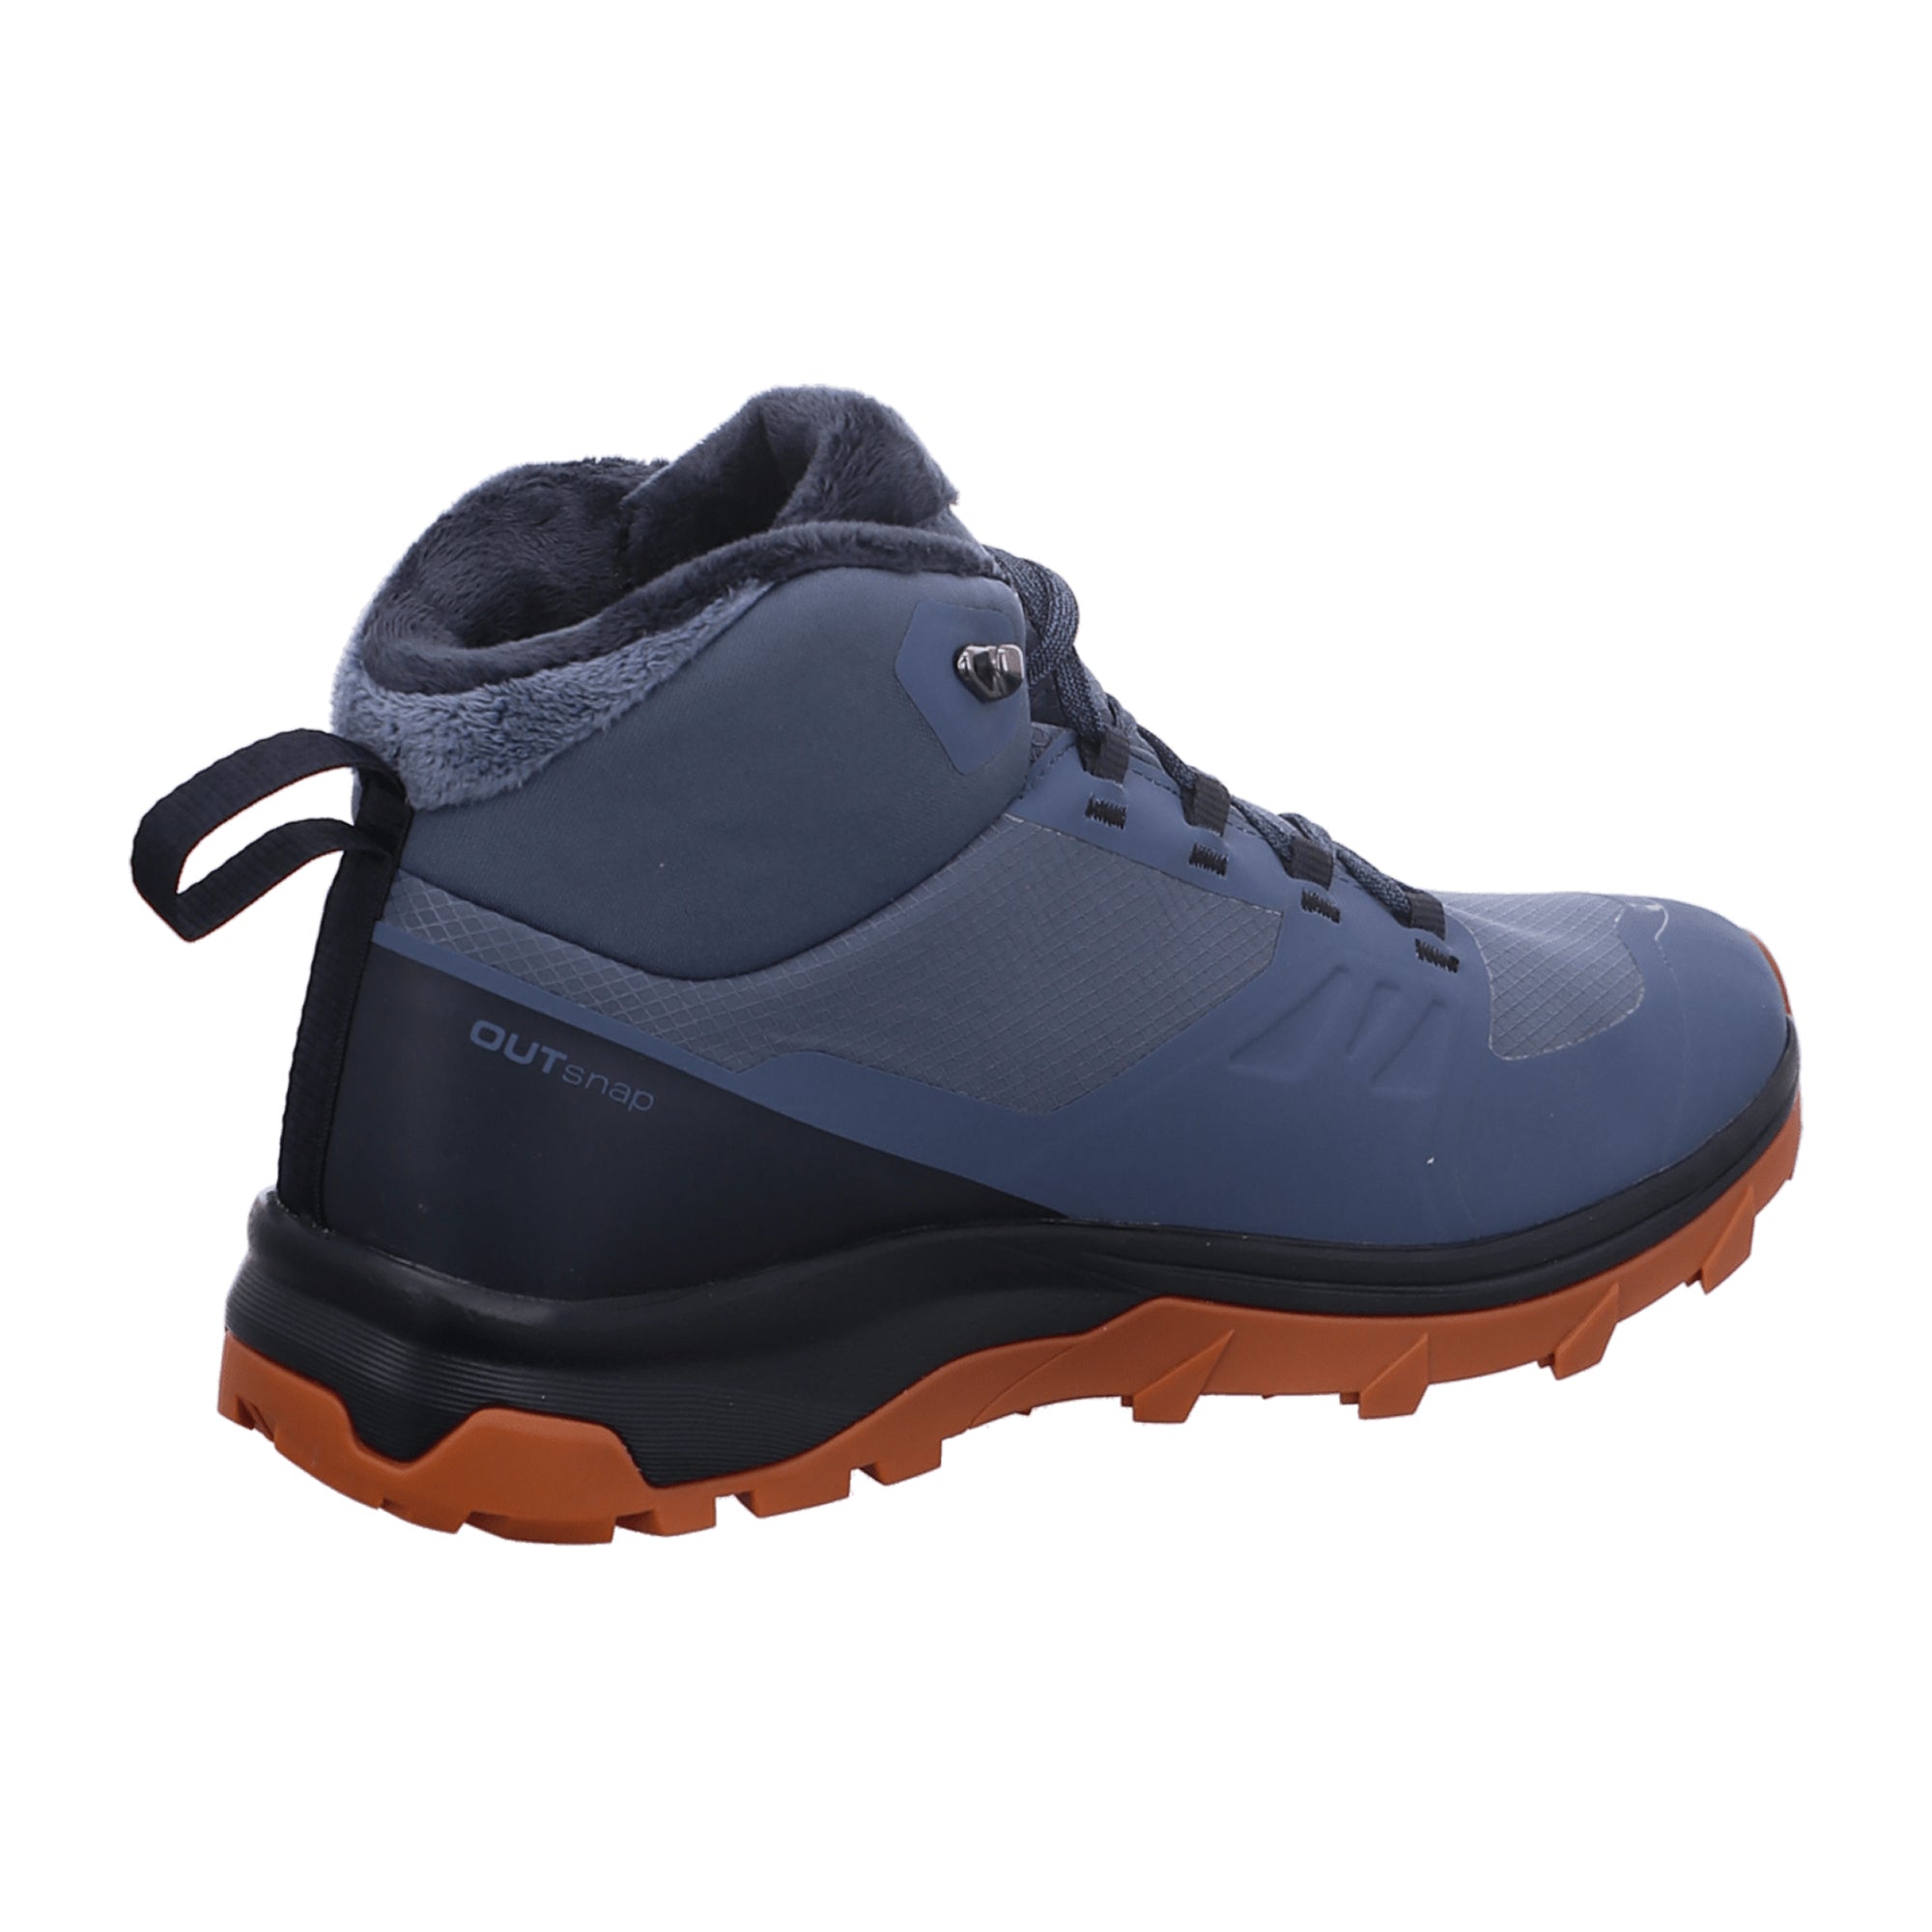 Salomon OU Tsnap CSWP for men, blue, shoes